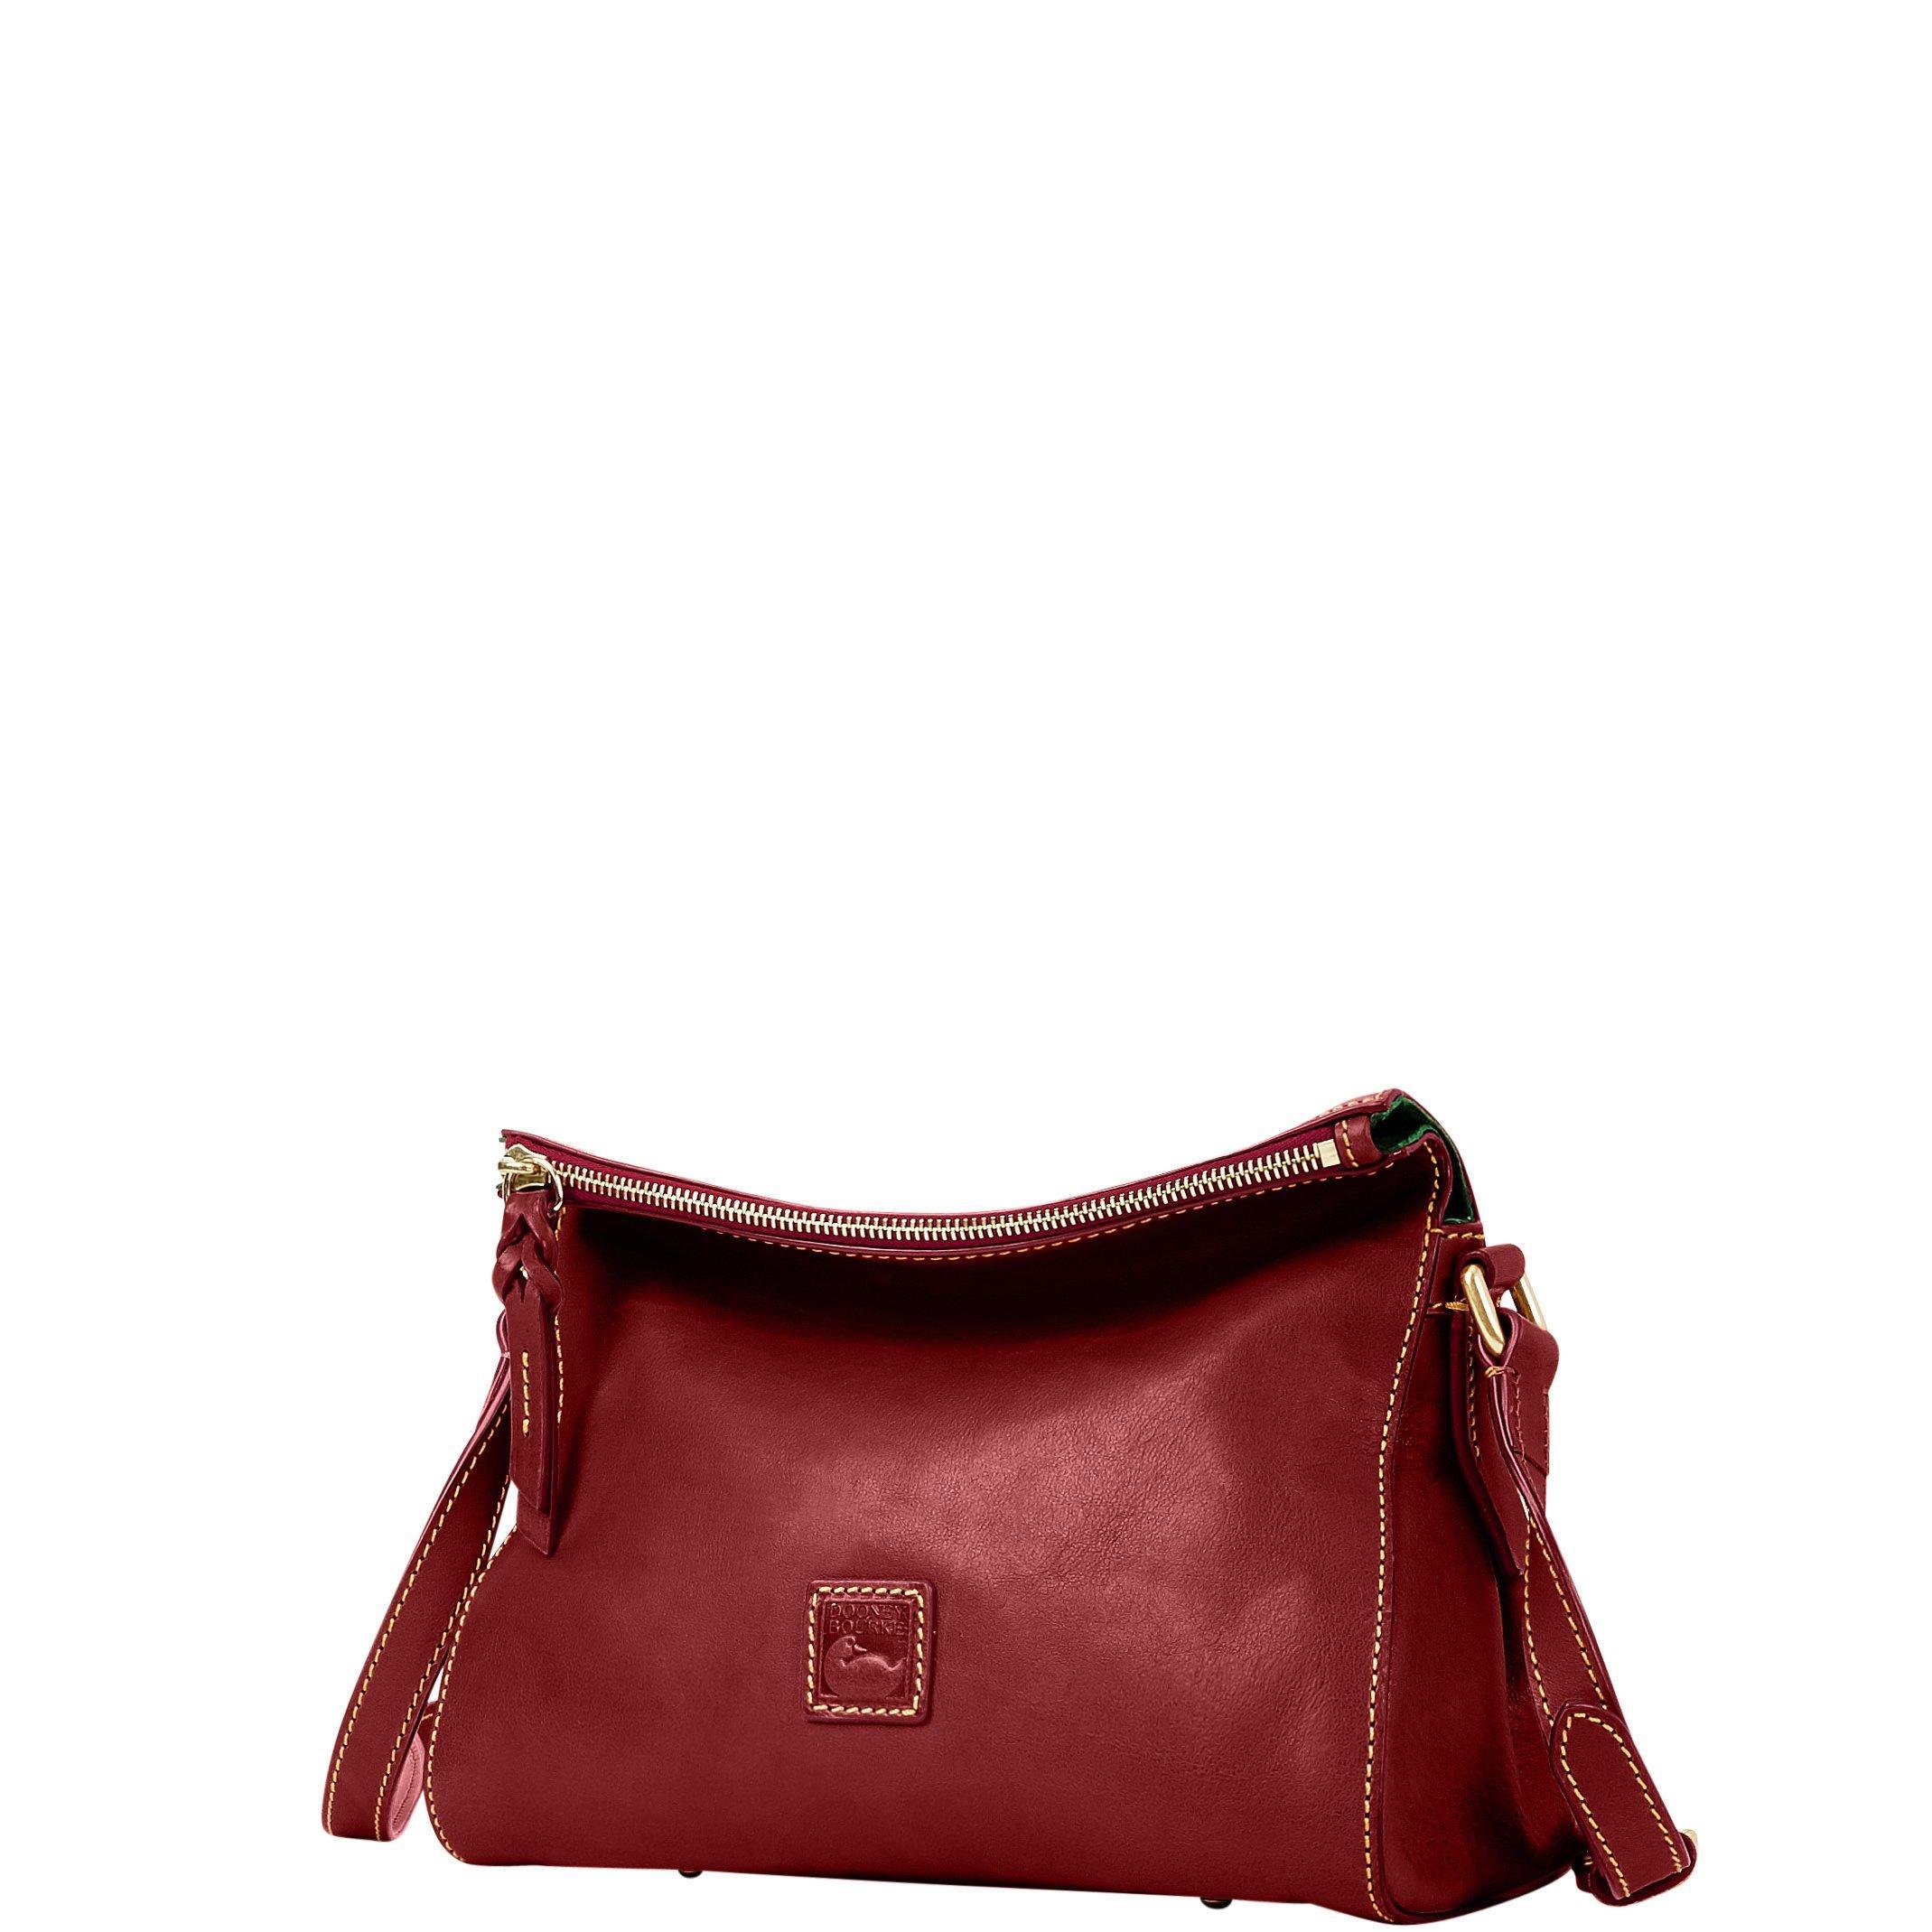 Dooney & Bourke Florentine Leather Cameron Crossbody Satchel Chestnut Mini Bag 